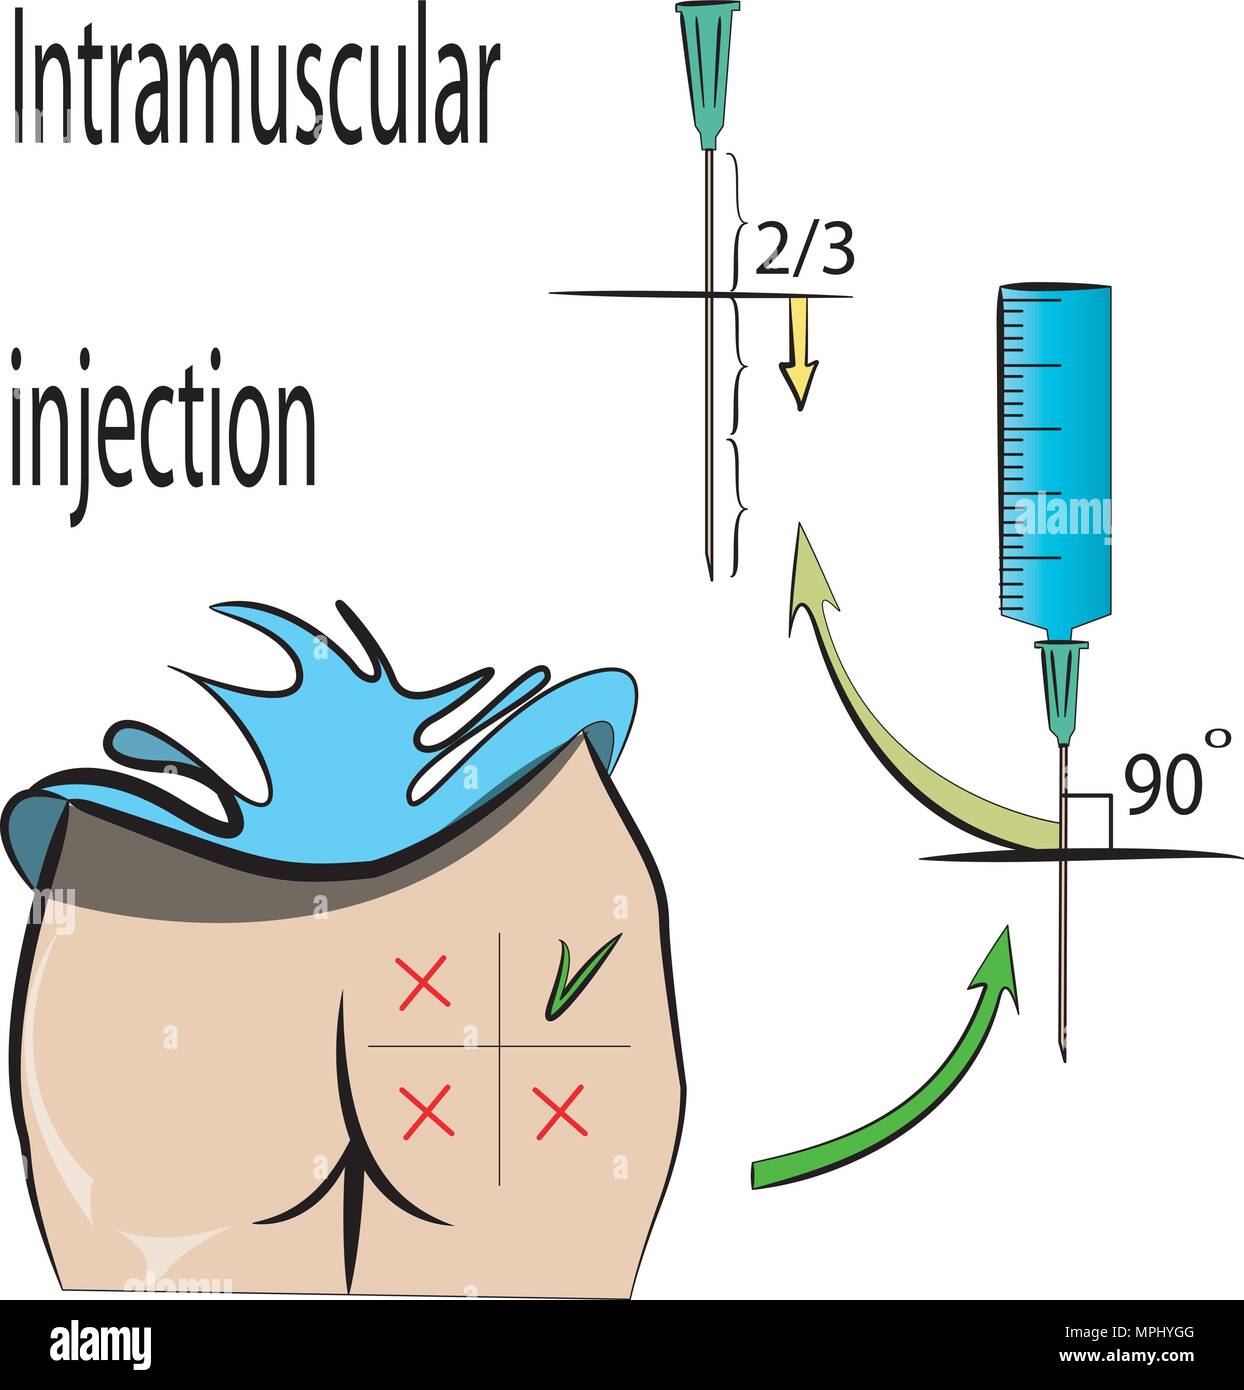 Regeln zur intramuskulären Injektion Stock-Vektorgrafik - Alamy